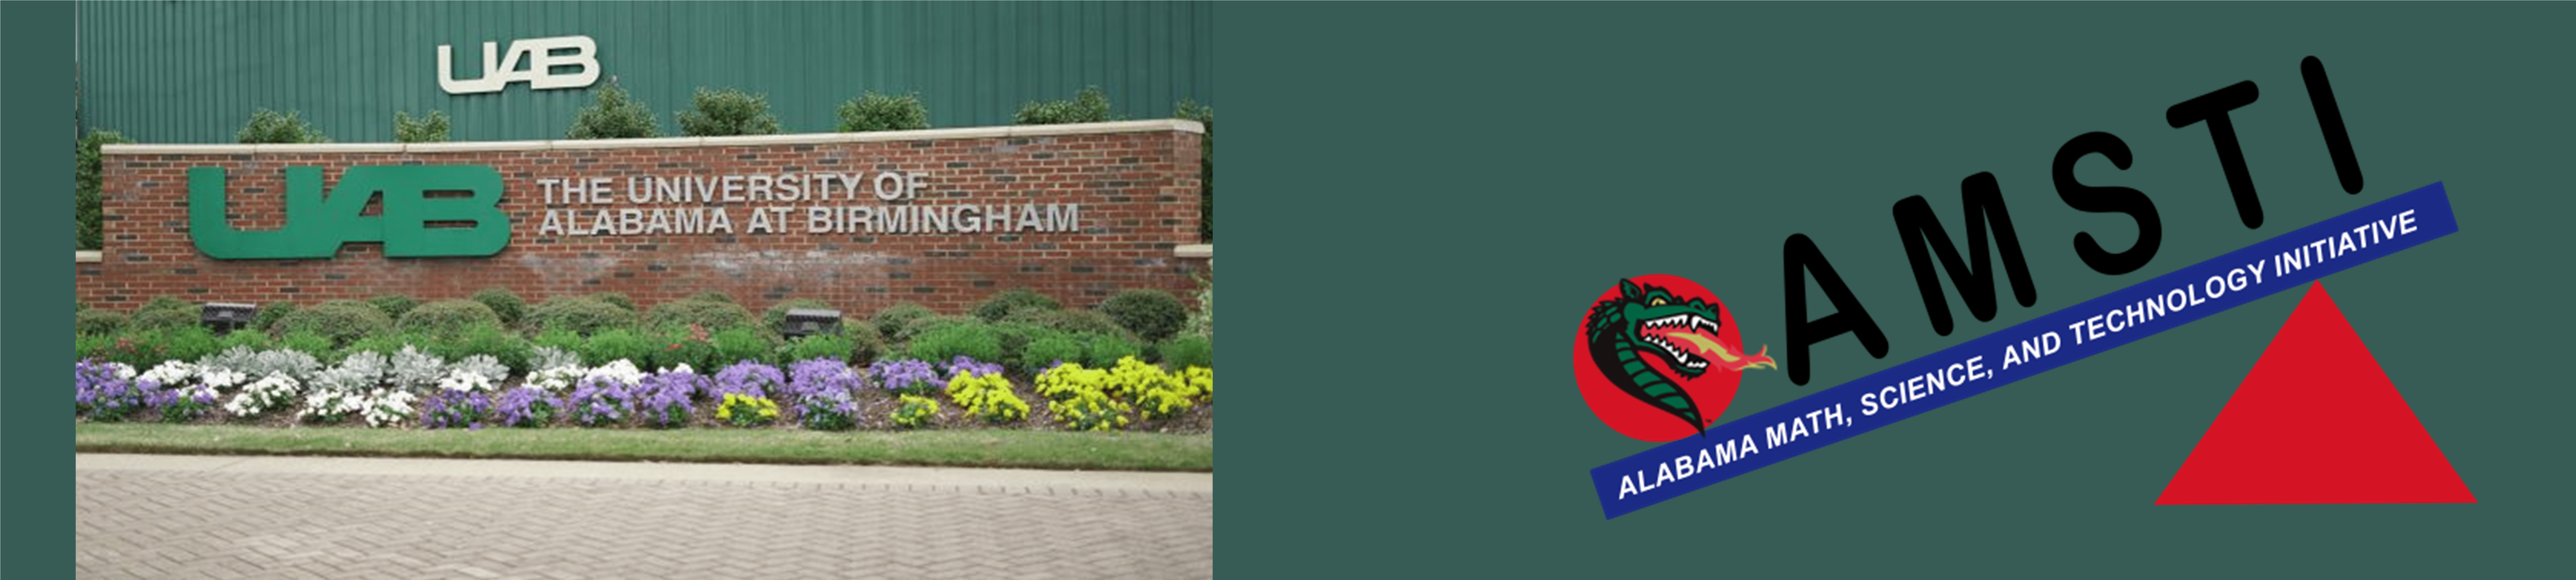 UAB’s Alabama Math Science & Technology Initiative (AMSTI)